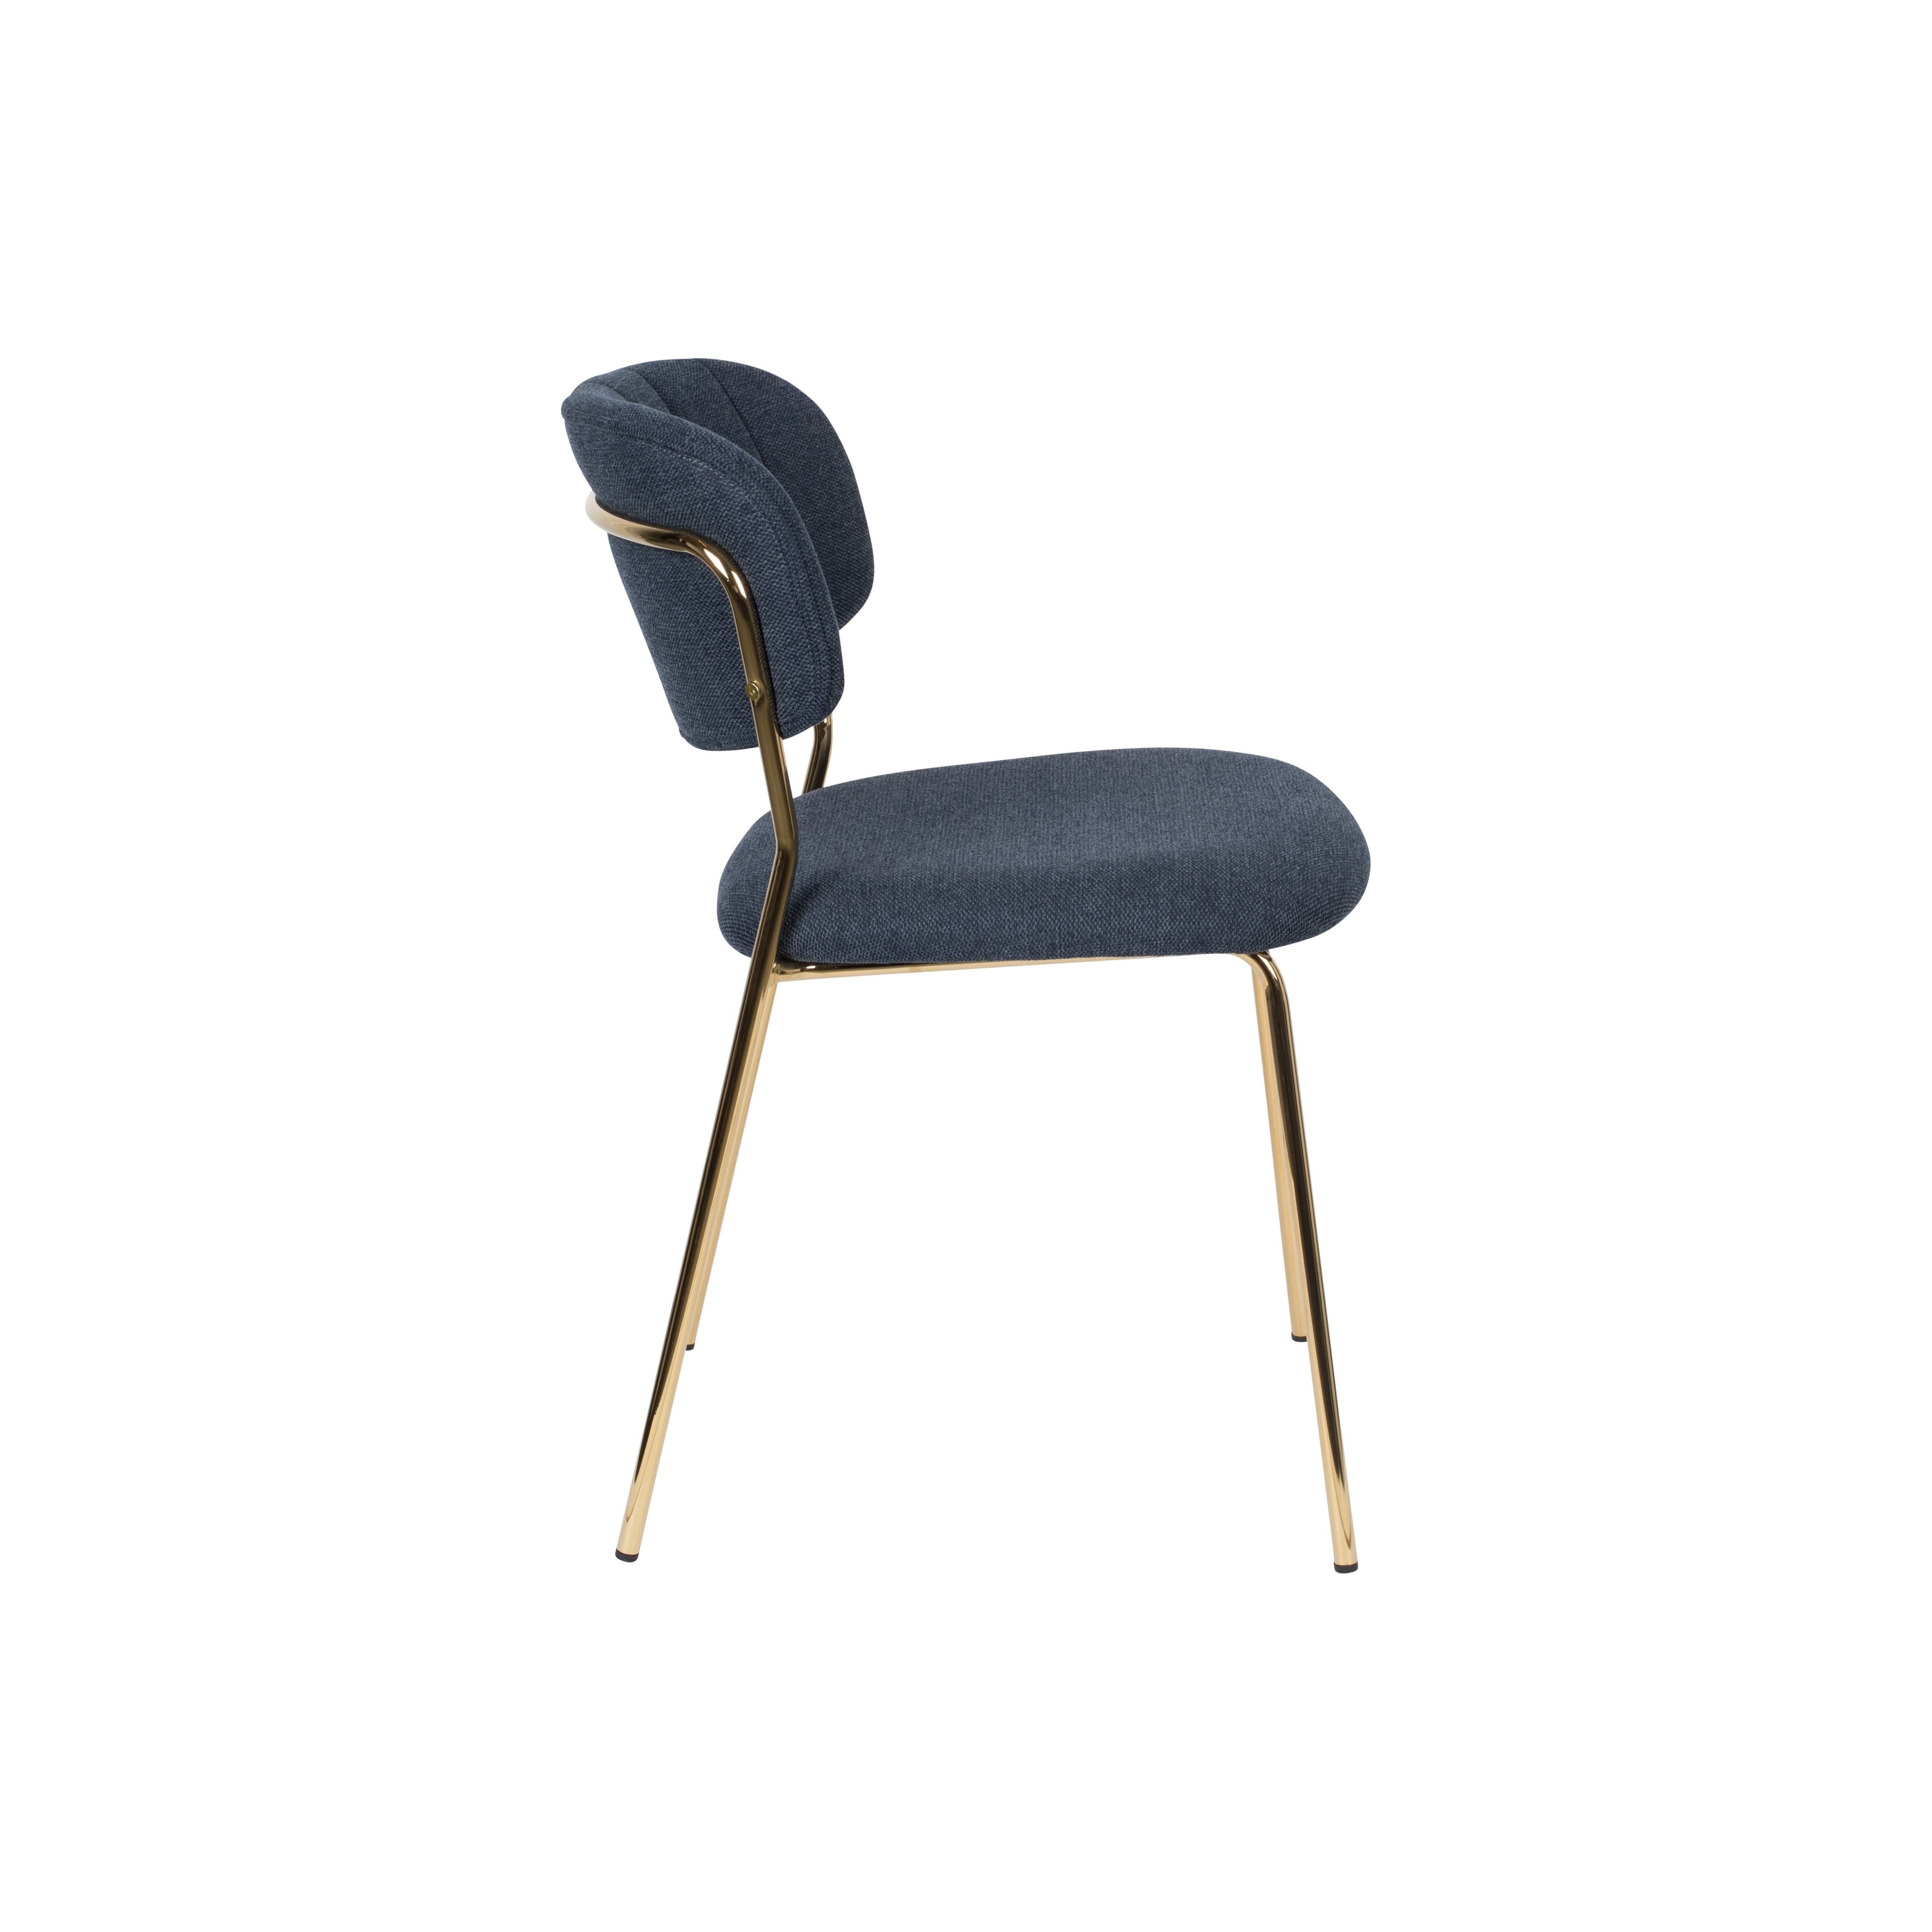 Chair jolien gold/dark blue | 2 pieces